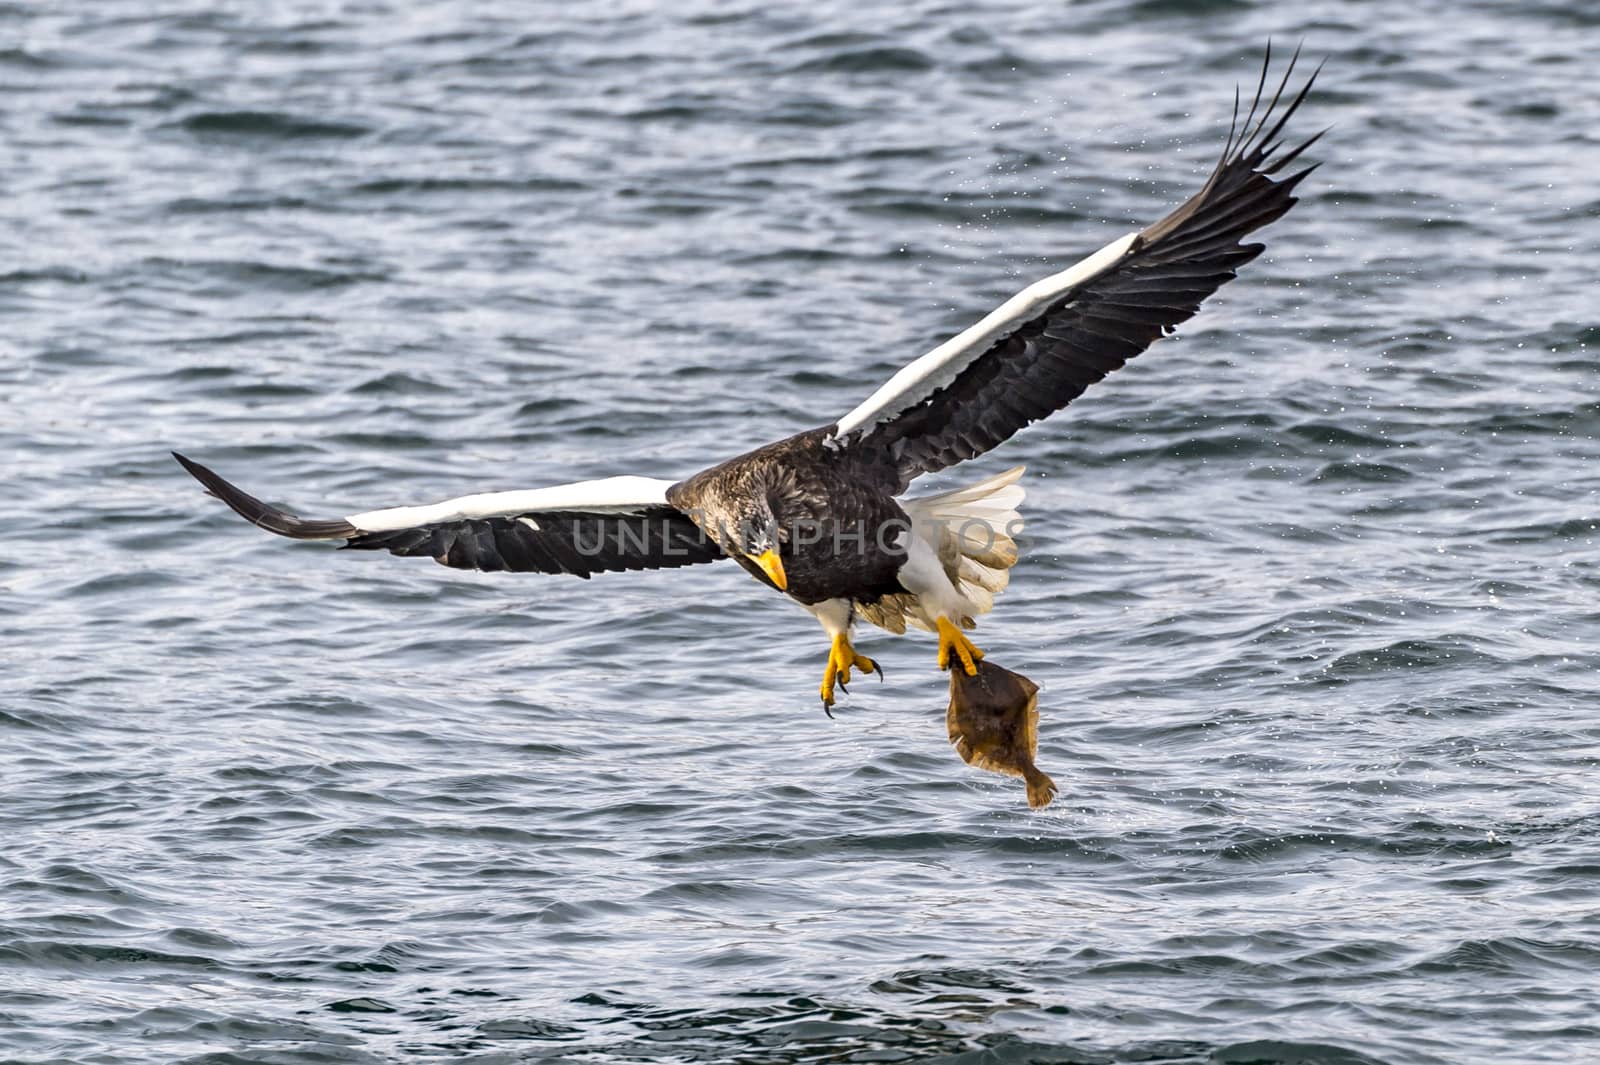 The Flying Predatory Stellers Sea-eagle near Rausu in Shiretoko, Hokkaido of Japan.